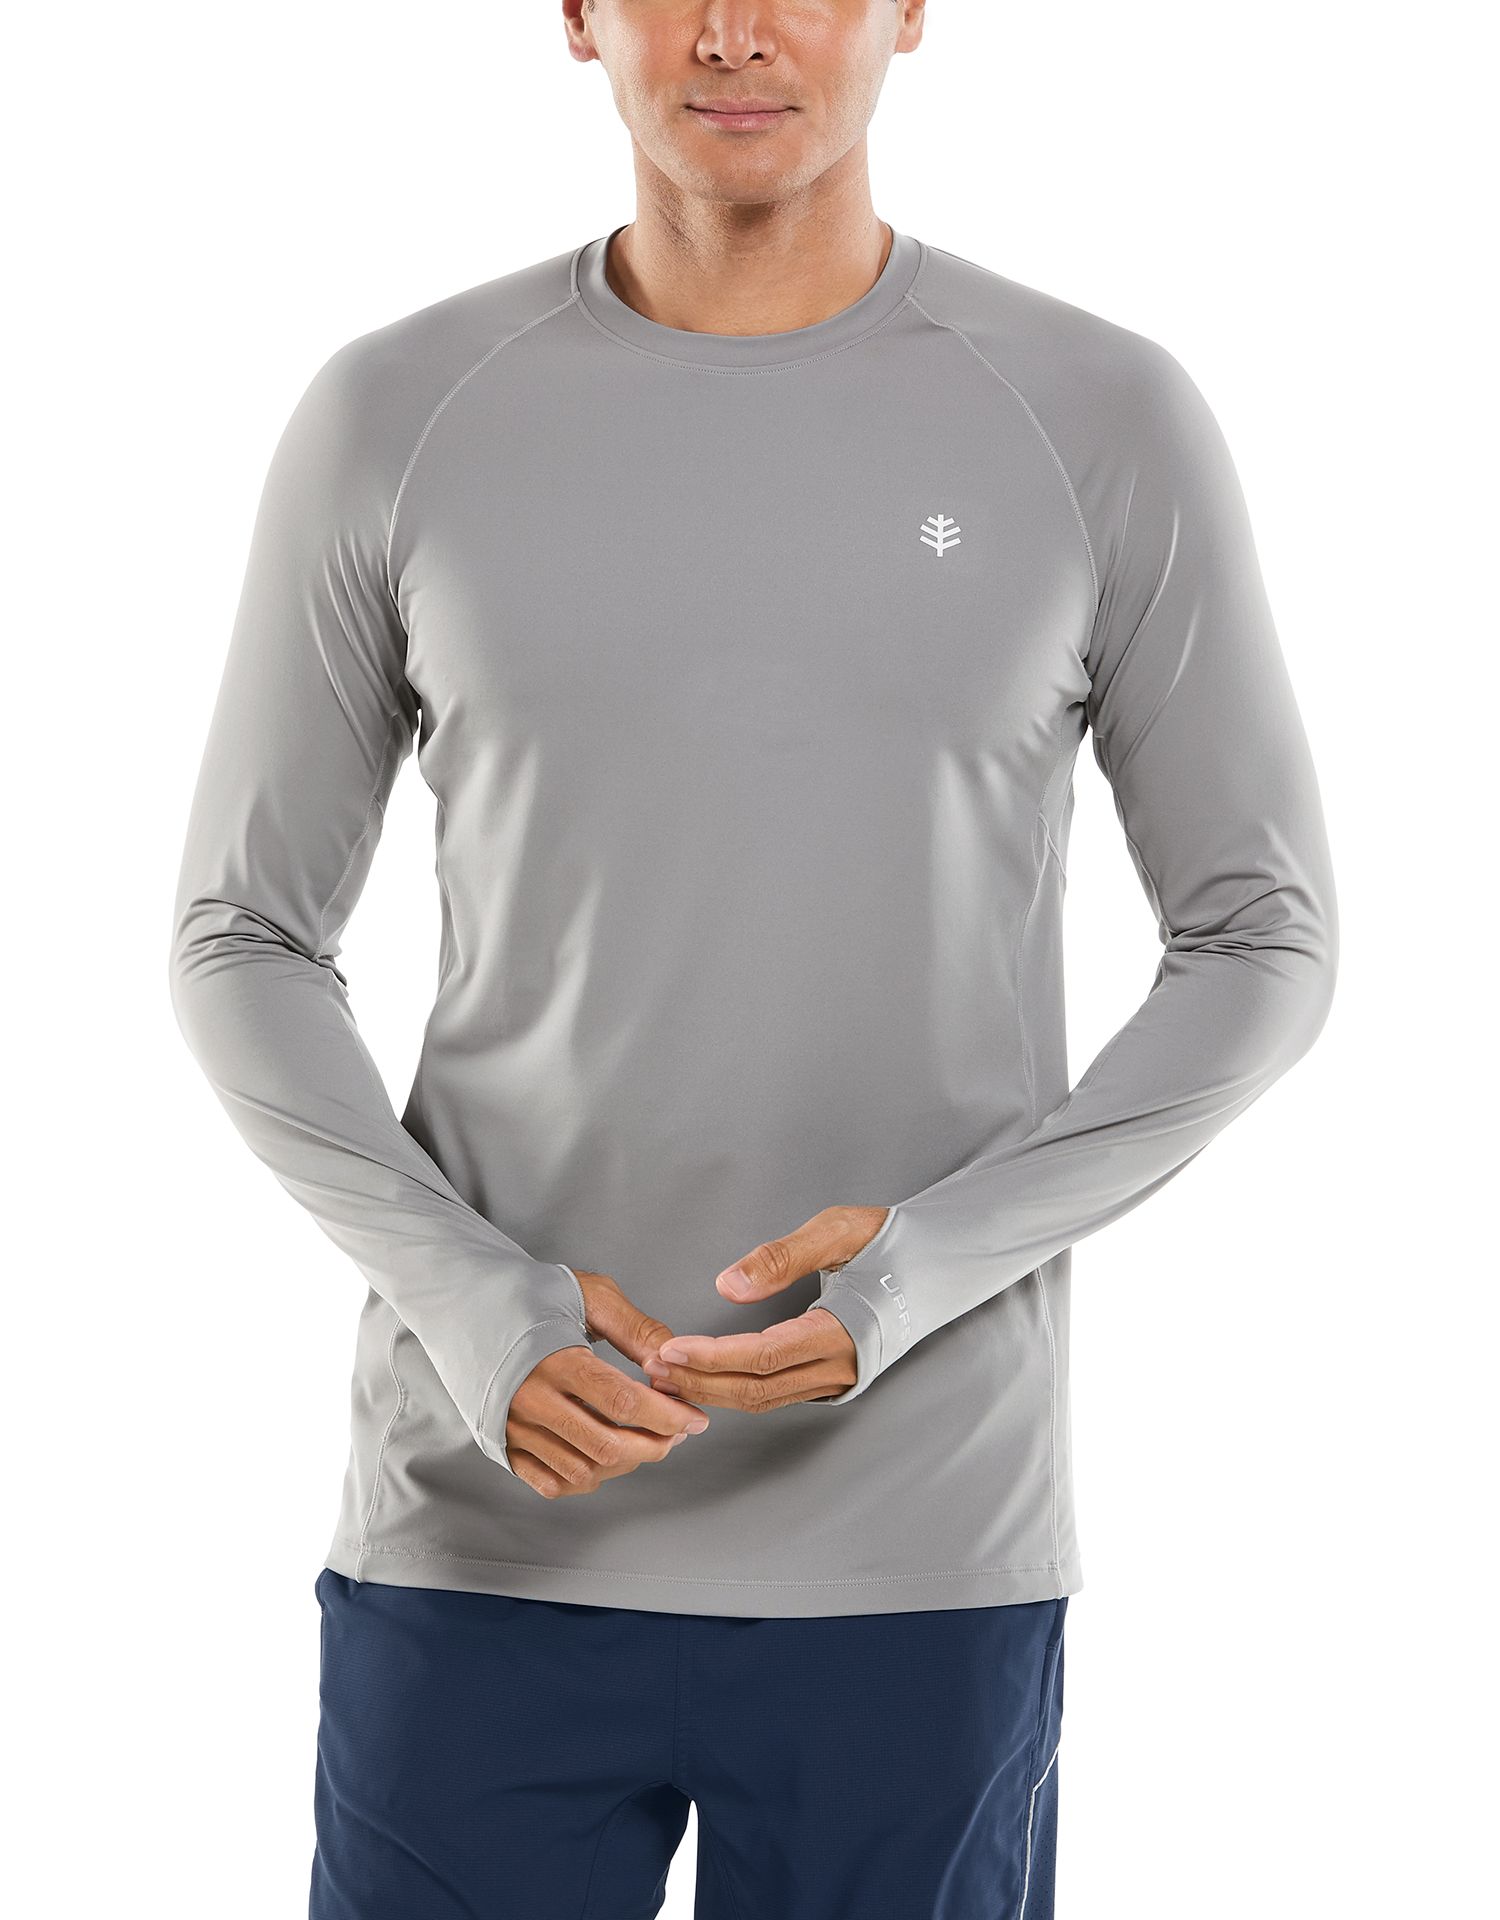 Coolibar - UV-Sportshirt für Herren - Langarmshirt - Agility Performance - Grau